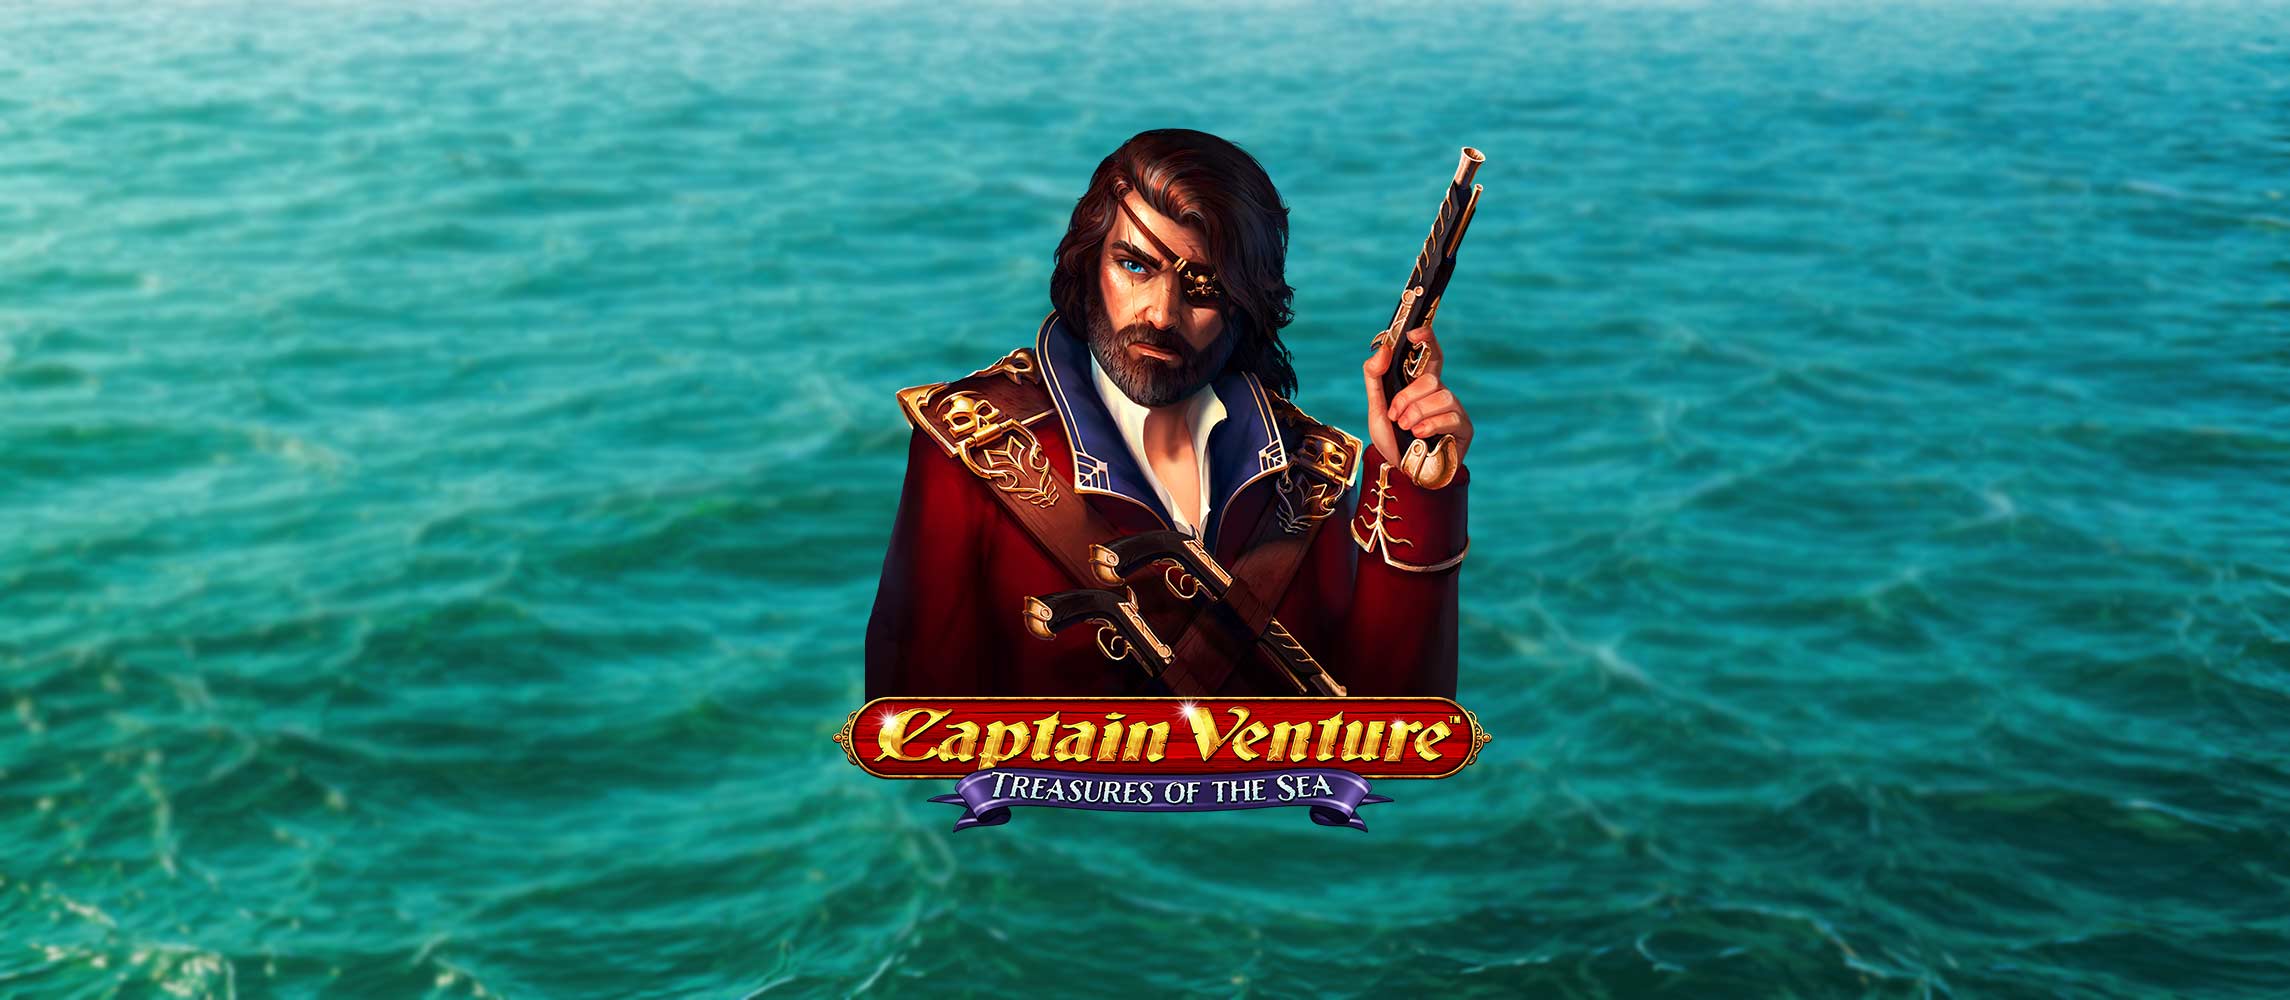 Captain Venture: Treasures of the Sea by Greentube